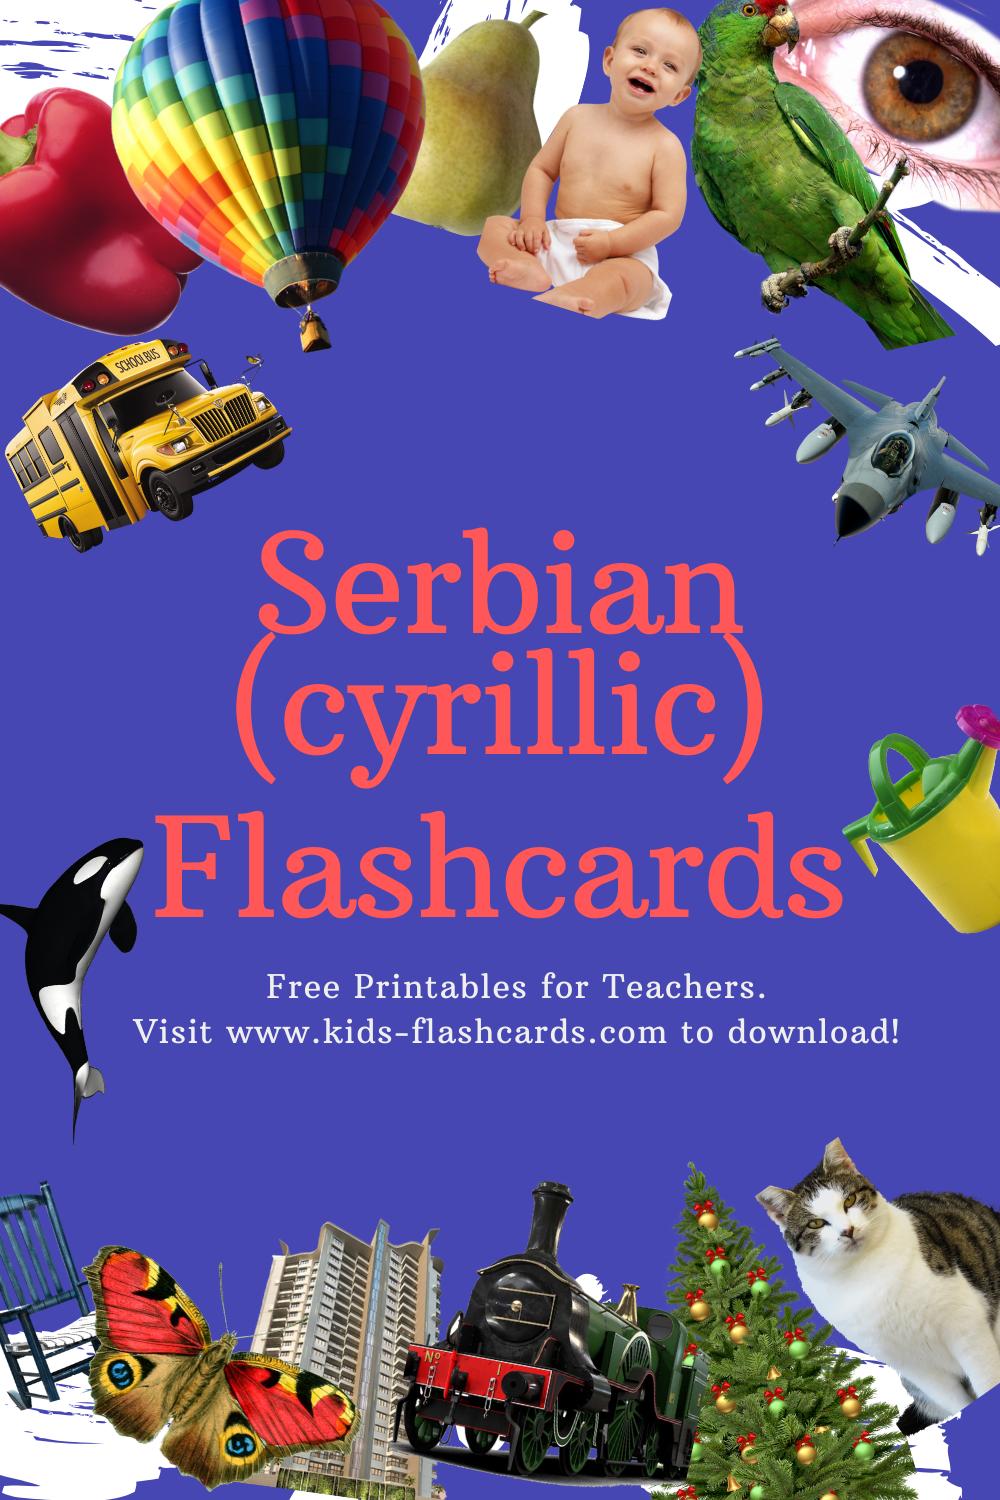 Worksheets to learn Serbian(cyrillic) language